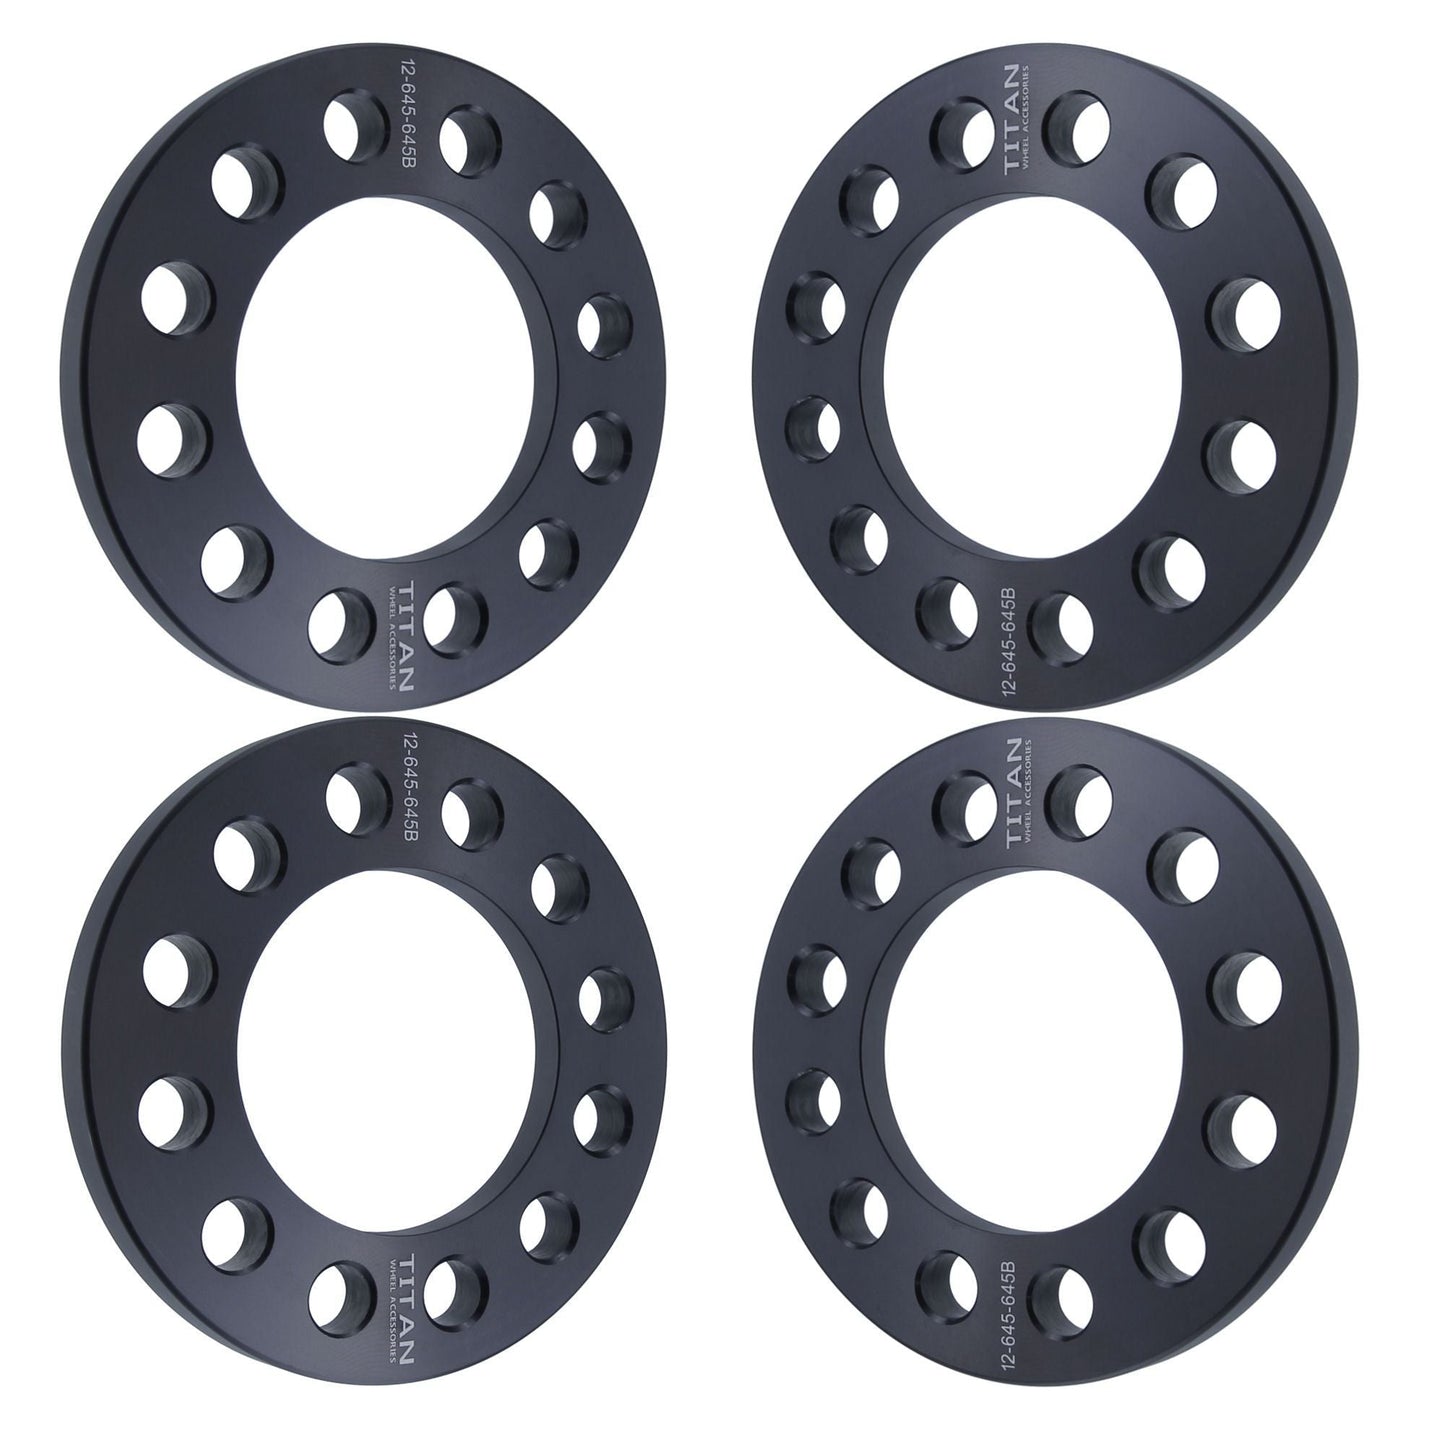 12mm Titan Wheel Spacers for Nissan Trucks Frontier Pathfinder Xterra | 6x114.3 (6x4.5) | Set of 4 | Titan Wheel Accessories